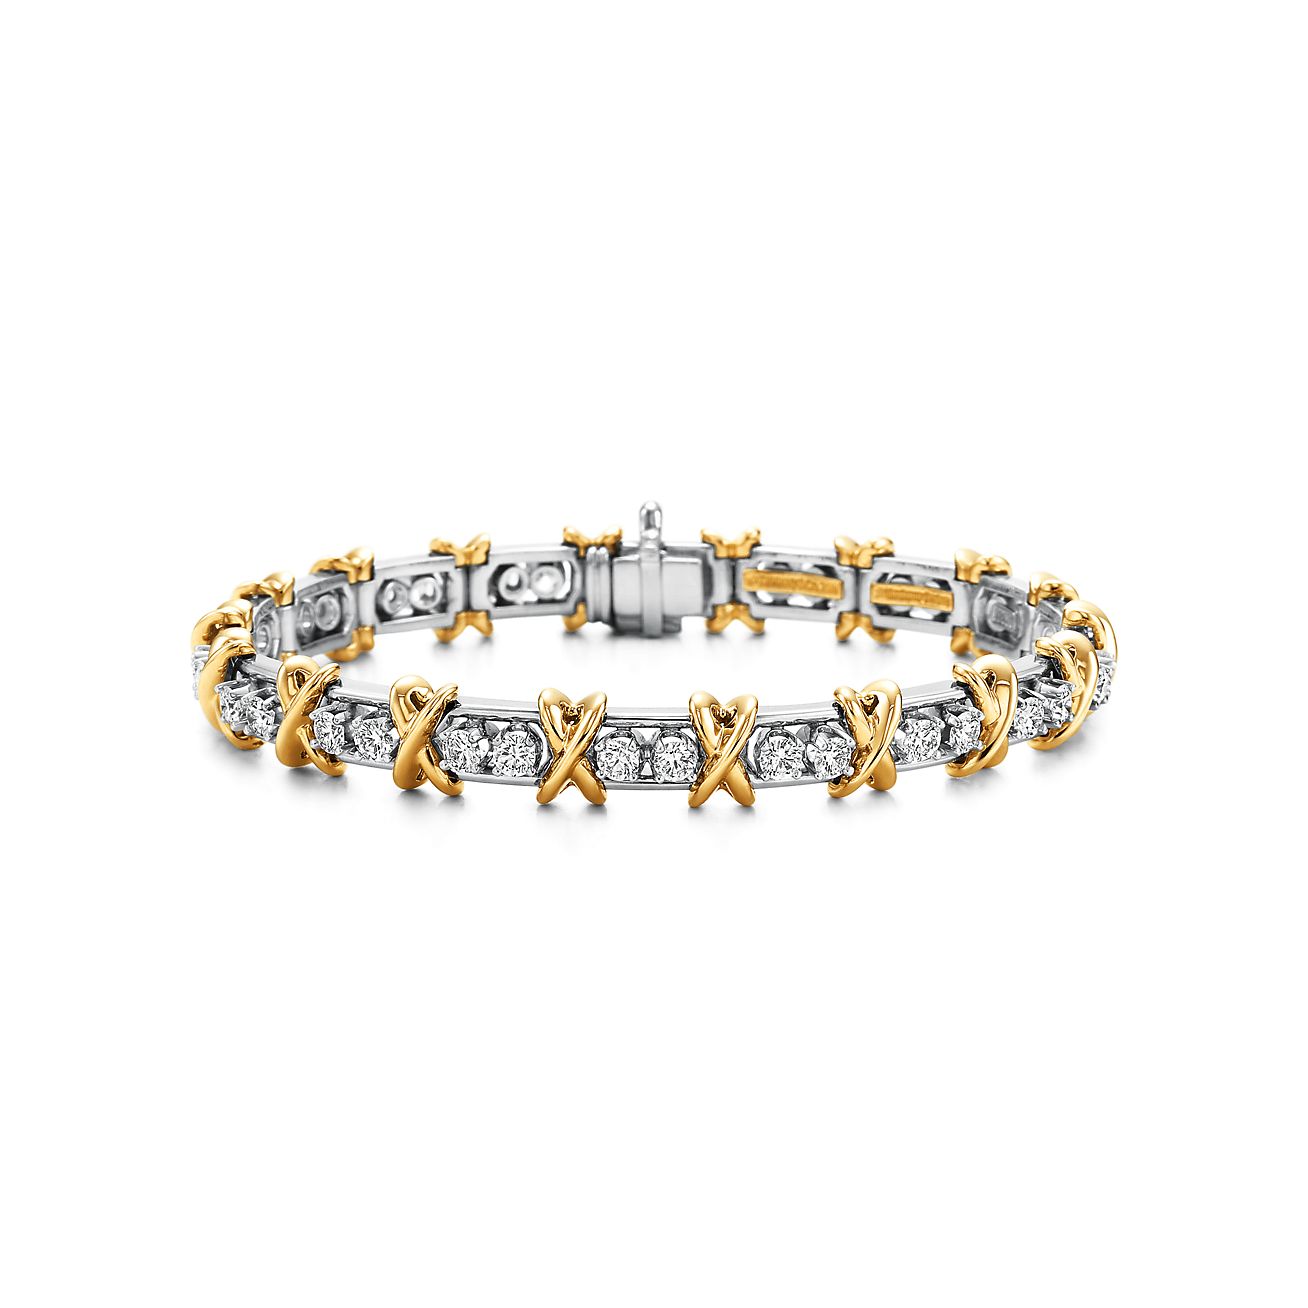 Tiffany  Co Schlumberger 36 Stone bracelet in 18k gold with diamonds   Tiffany  Co